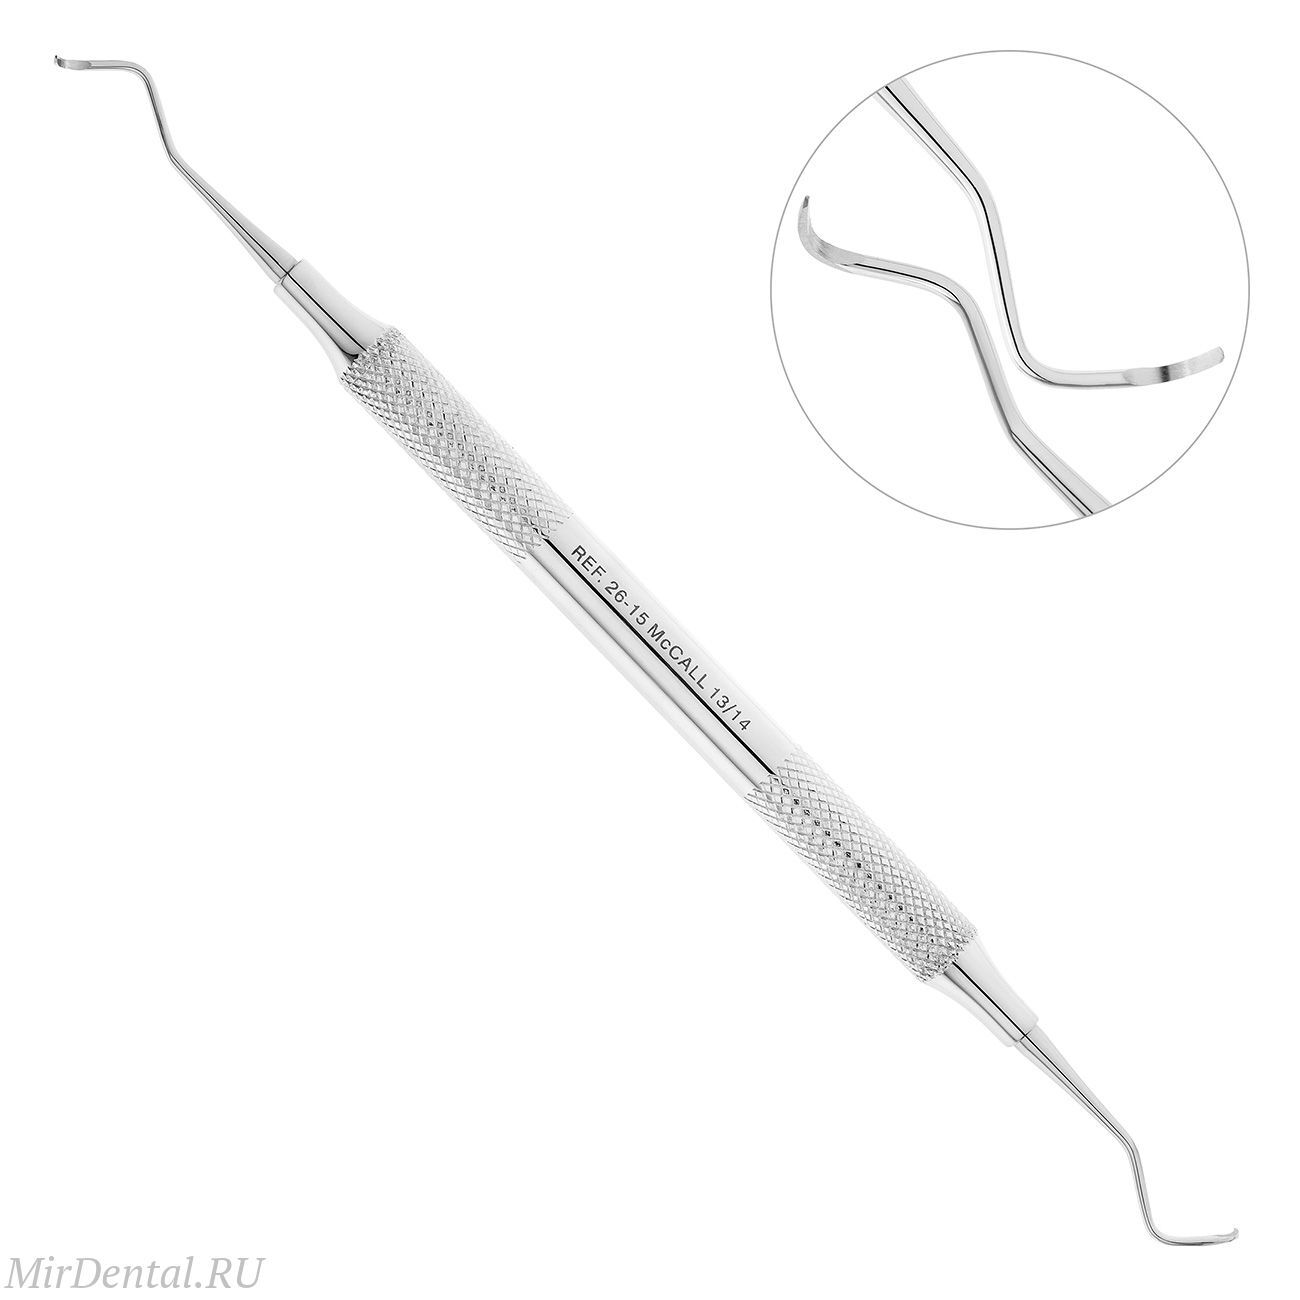 Скейлер парадонтологический McCall, форма 13/14, ручка диаметр 8 мм, 26-15*